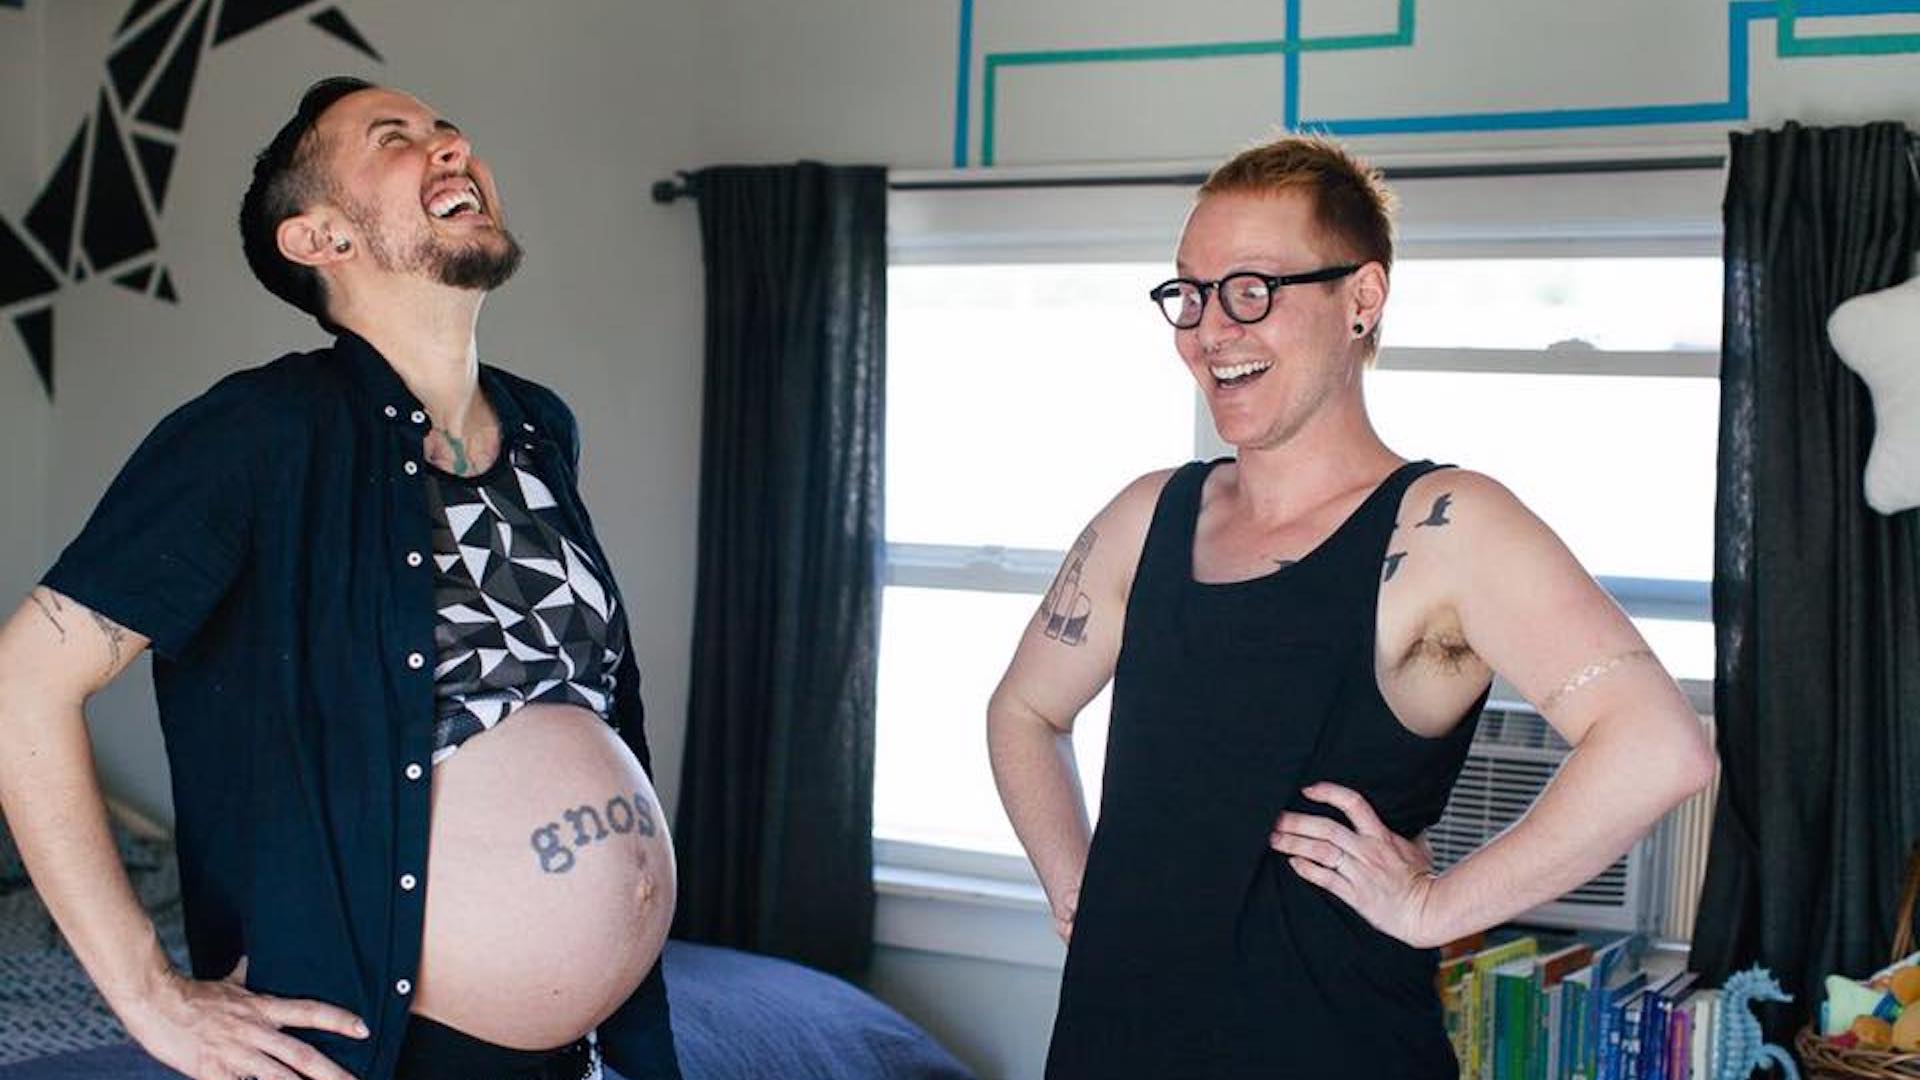 Transgender man gives birth to baby boy